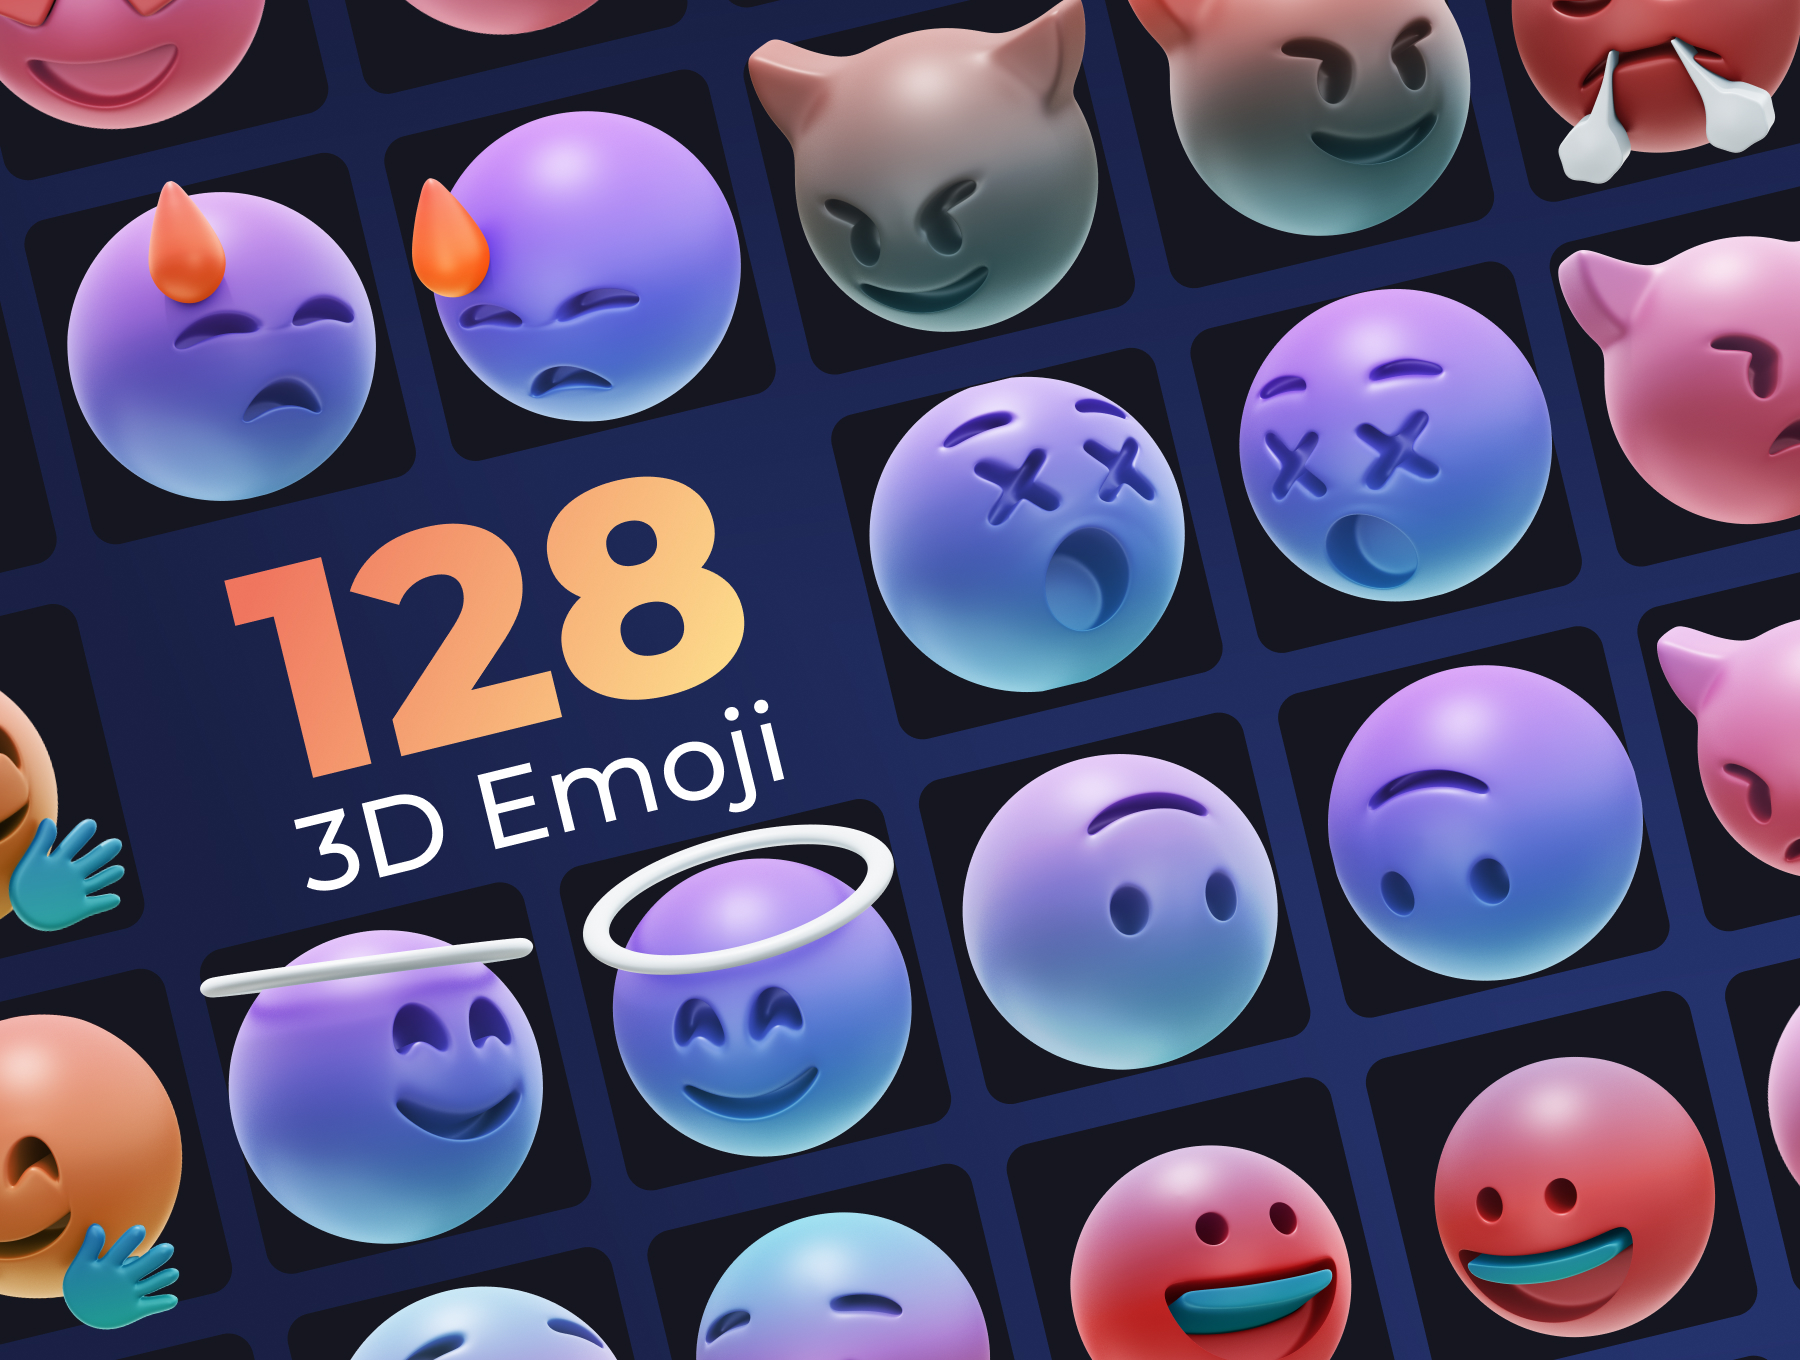 636 128款创意潮流3D立体emoji表情包png免抠icon图标插画设计素材HUUUGE Gradient And Gold Emoji 3D Pack